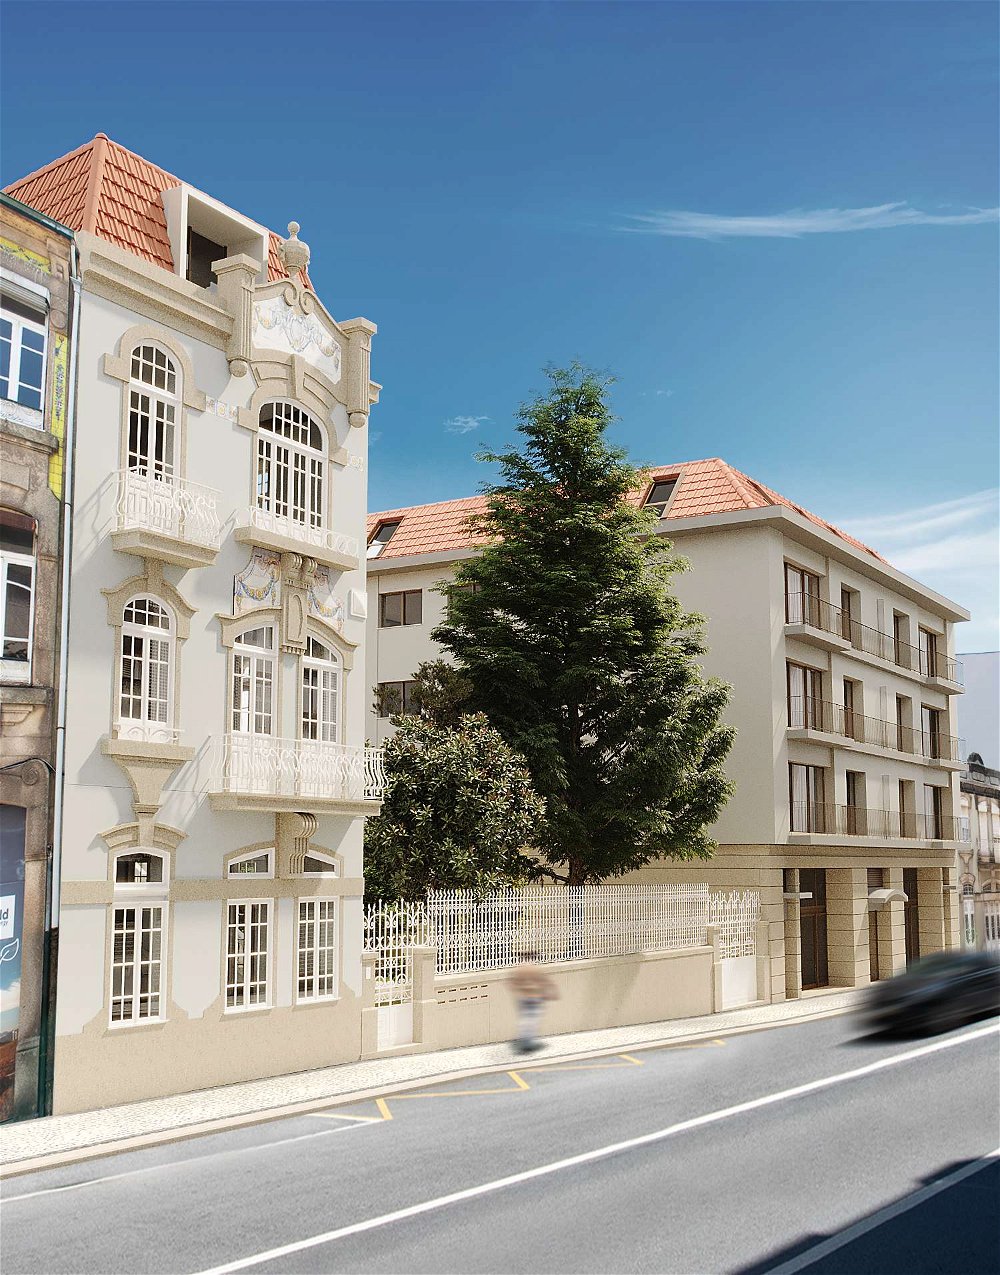 4 bedroom Villa with balcony and garden in Cedofeita, Porto 3310536421